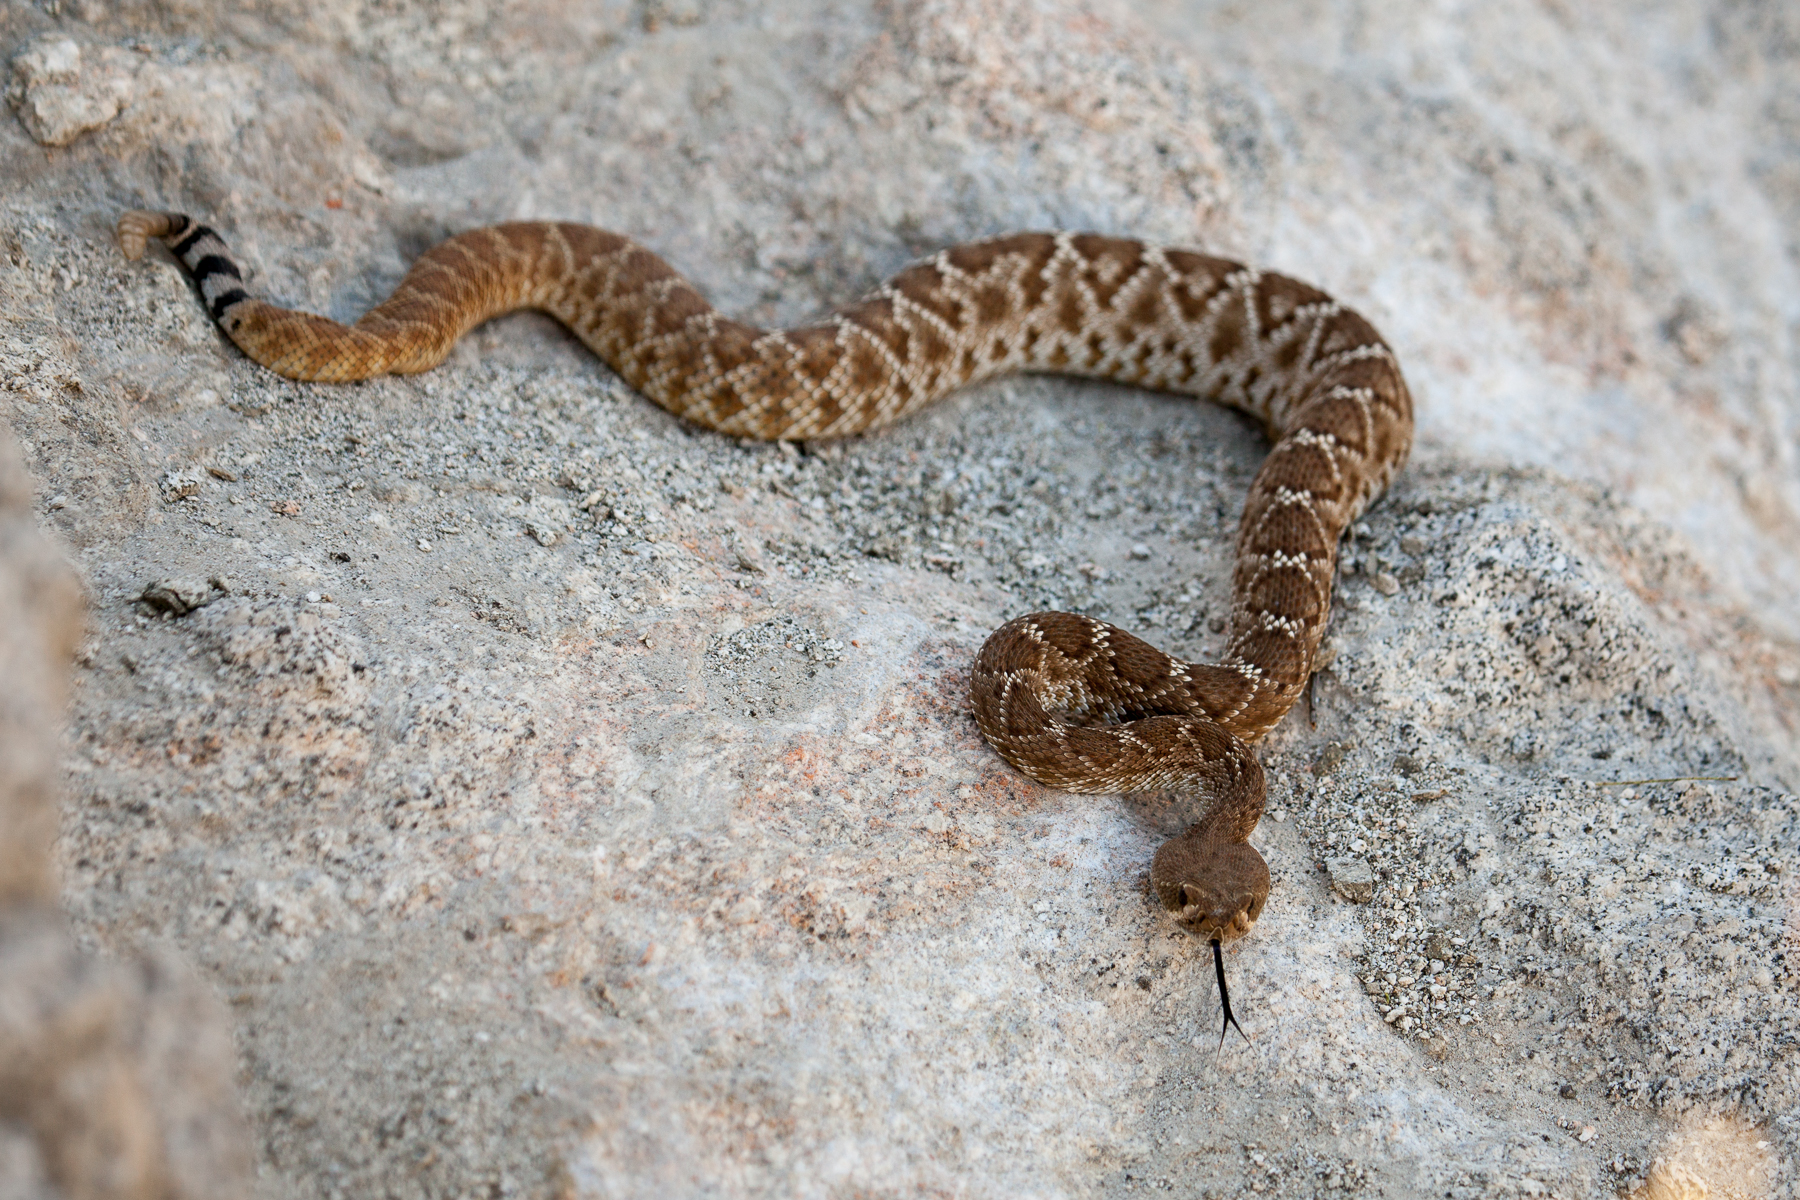 Brown and tan rattlesnake on gray rock